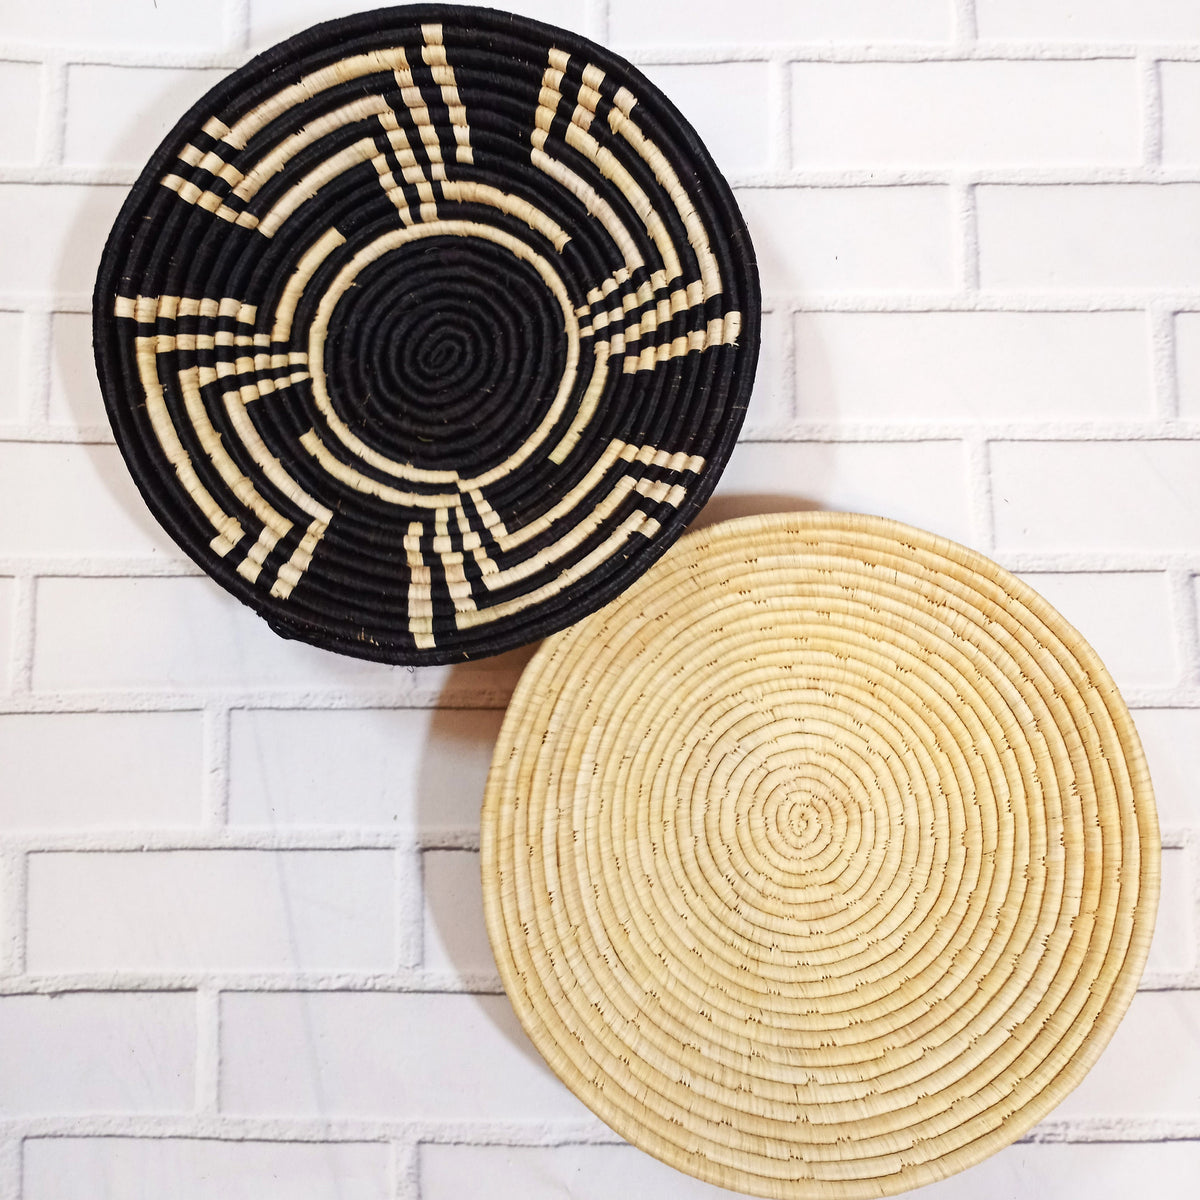 Woven wall basket, African wall basket set, Hanging wall basket, Wall basket decor, Boho wall baskets, African wall decor, Tonga baskets